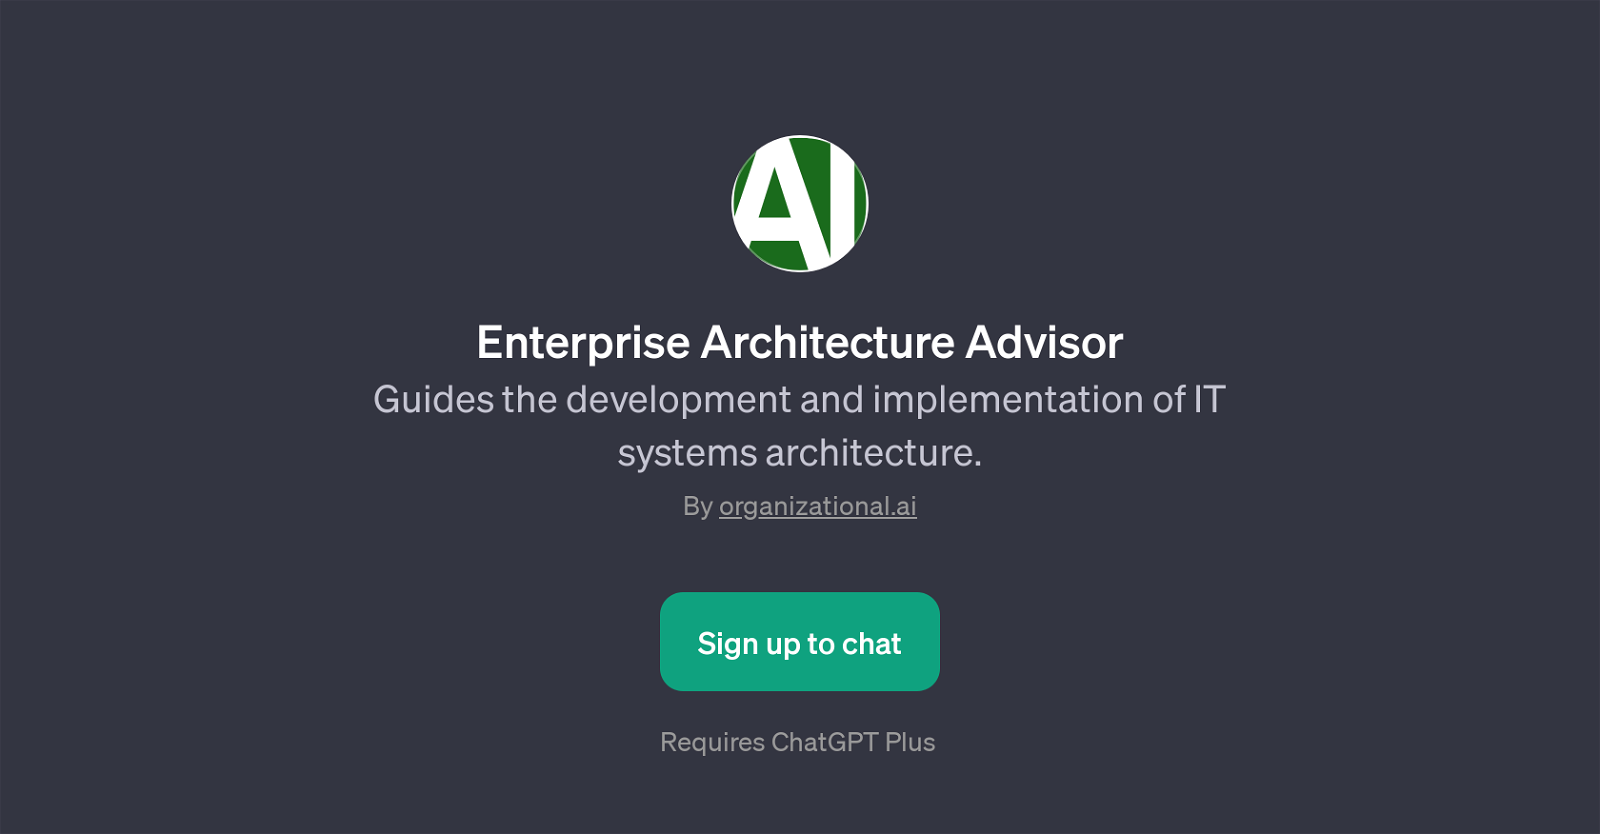 Enterprise Architecture Advisor website